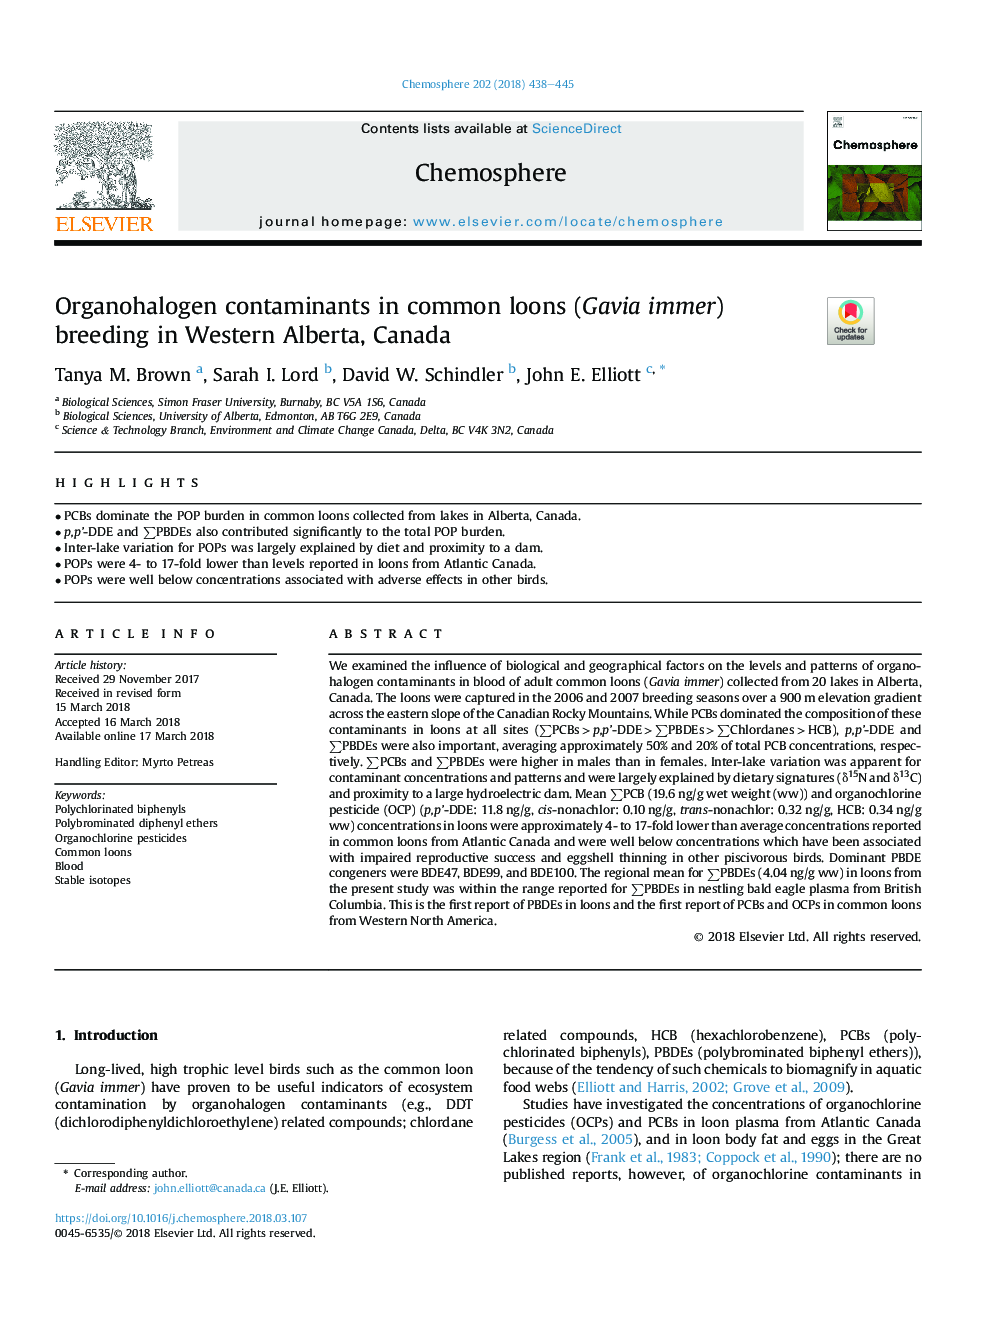 Organohalogen contaminants in common loons (Gavia immer) breeding in Western Alberta, Canada